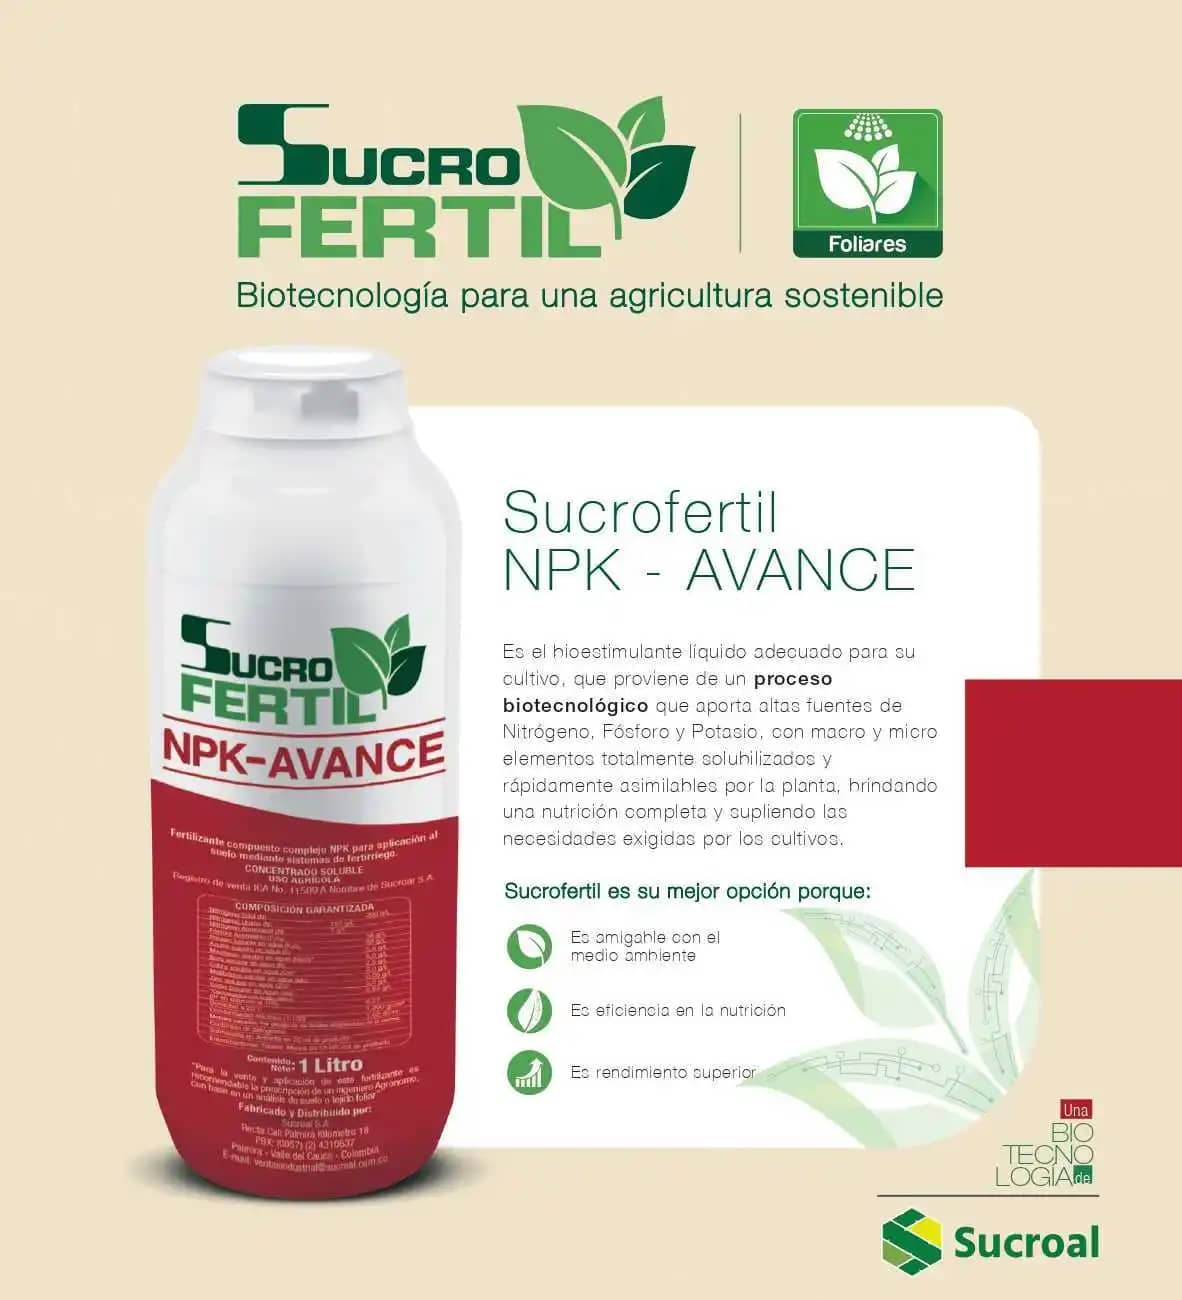 Fertilizante NPK Avance Sucrofertil.